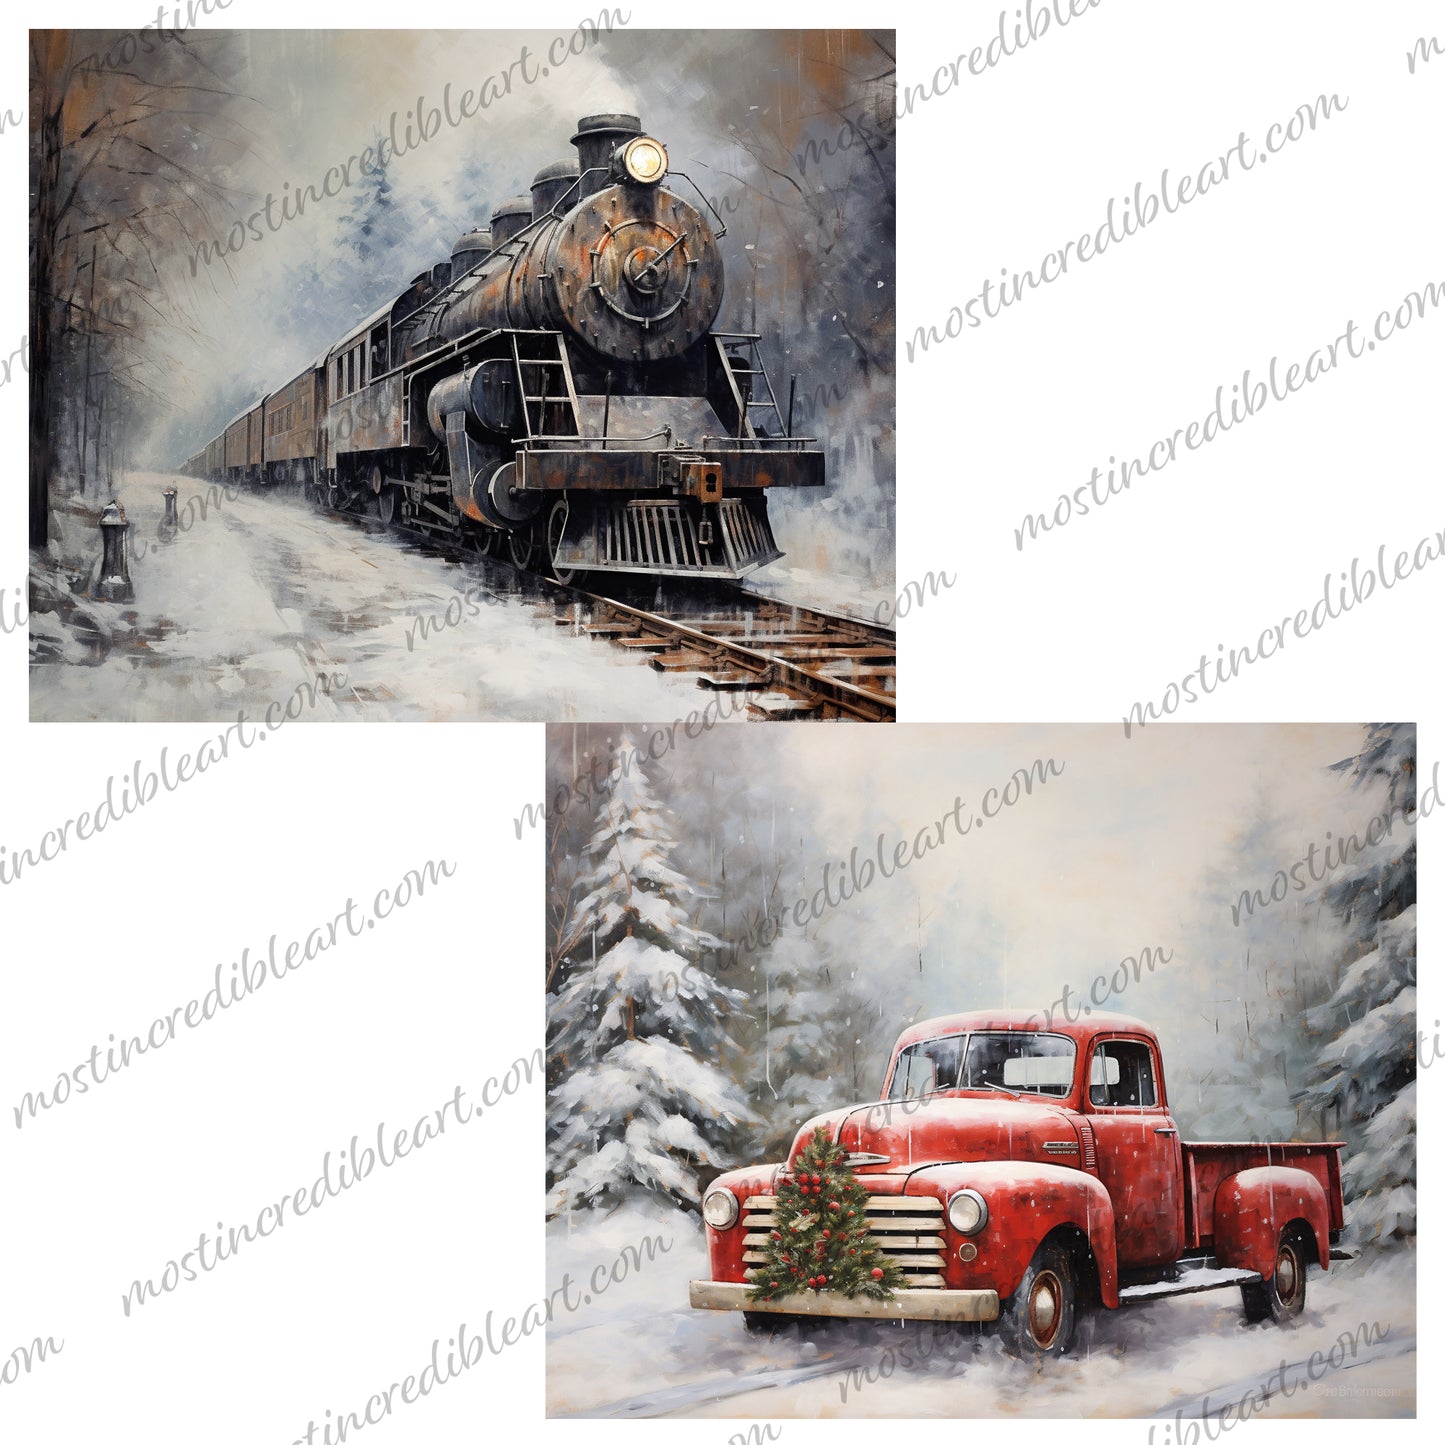 Printable Art Set for Christmas | 14 Rustic Winter Snowy Gallery Wall Decor Prints 2